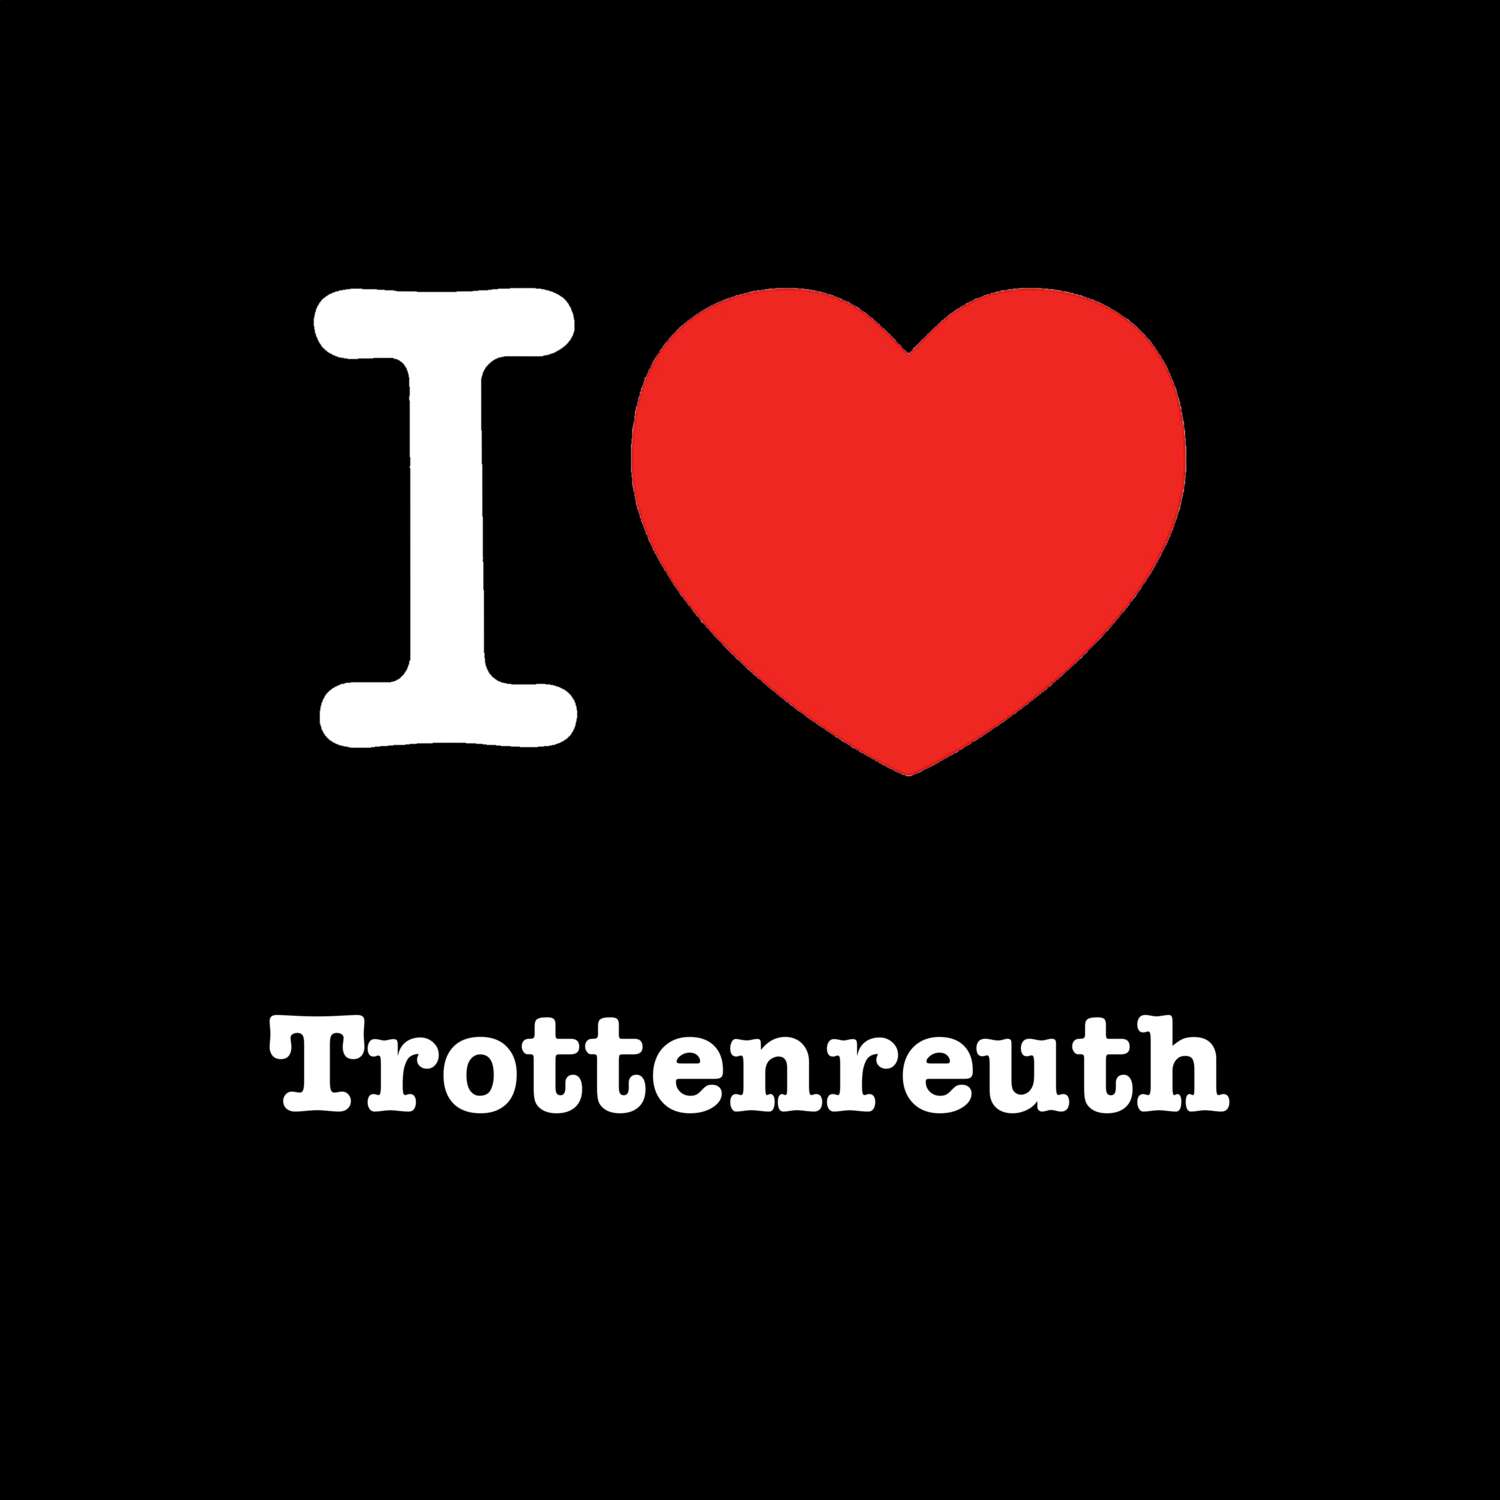 Trottenreuth T-Shirt »I love«